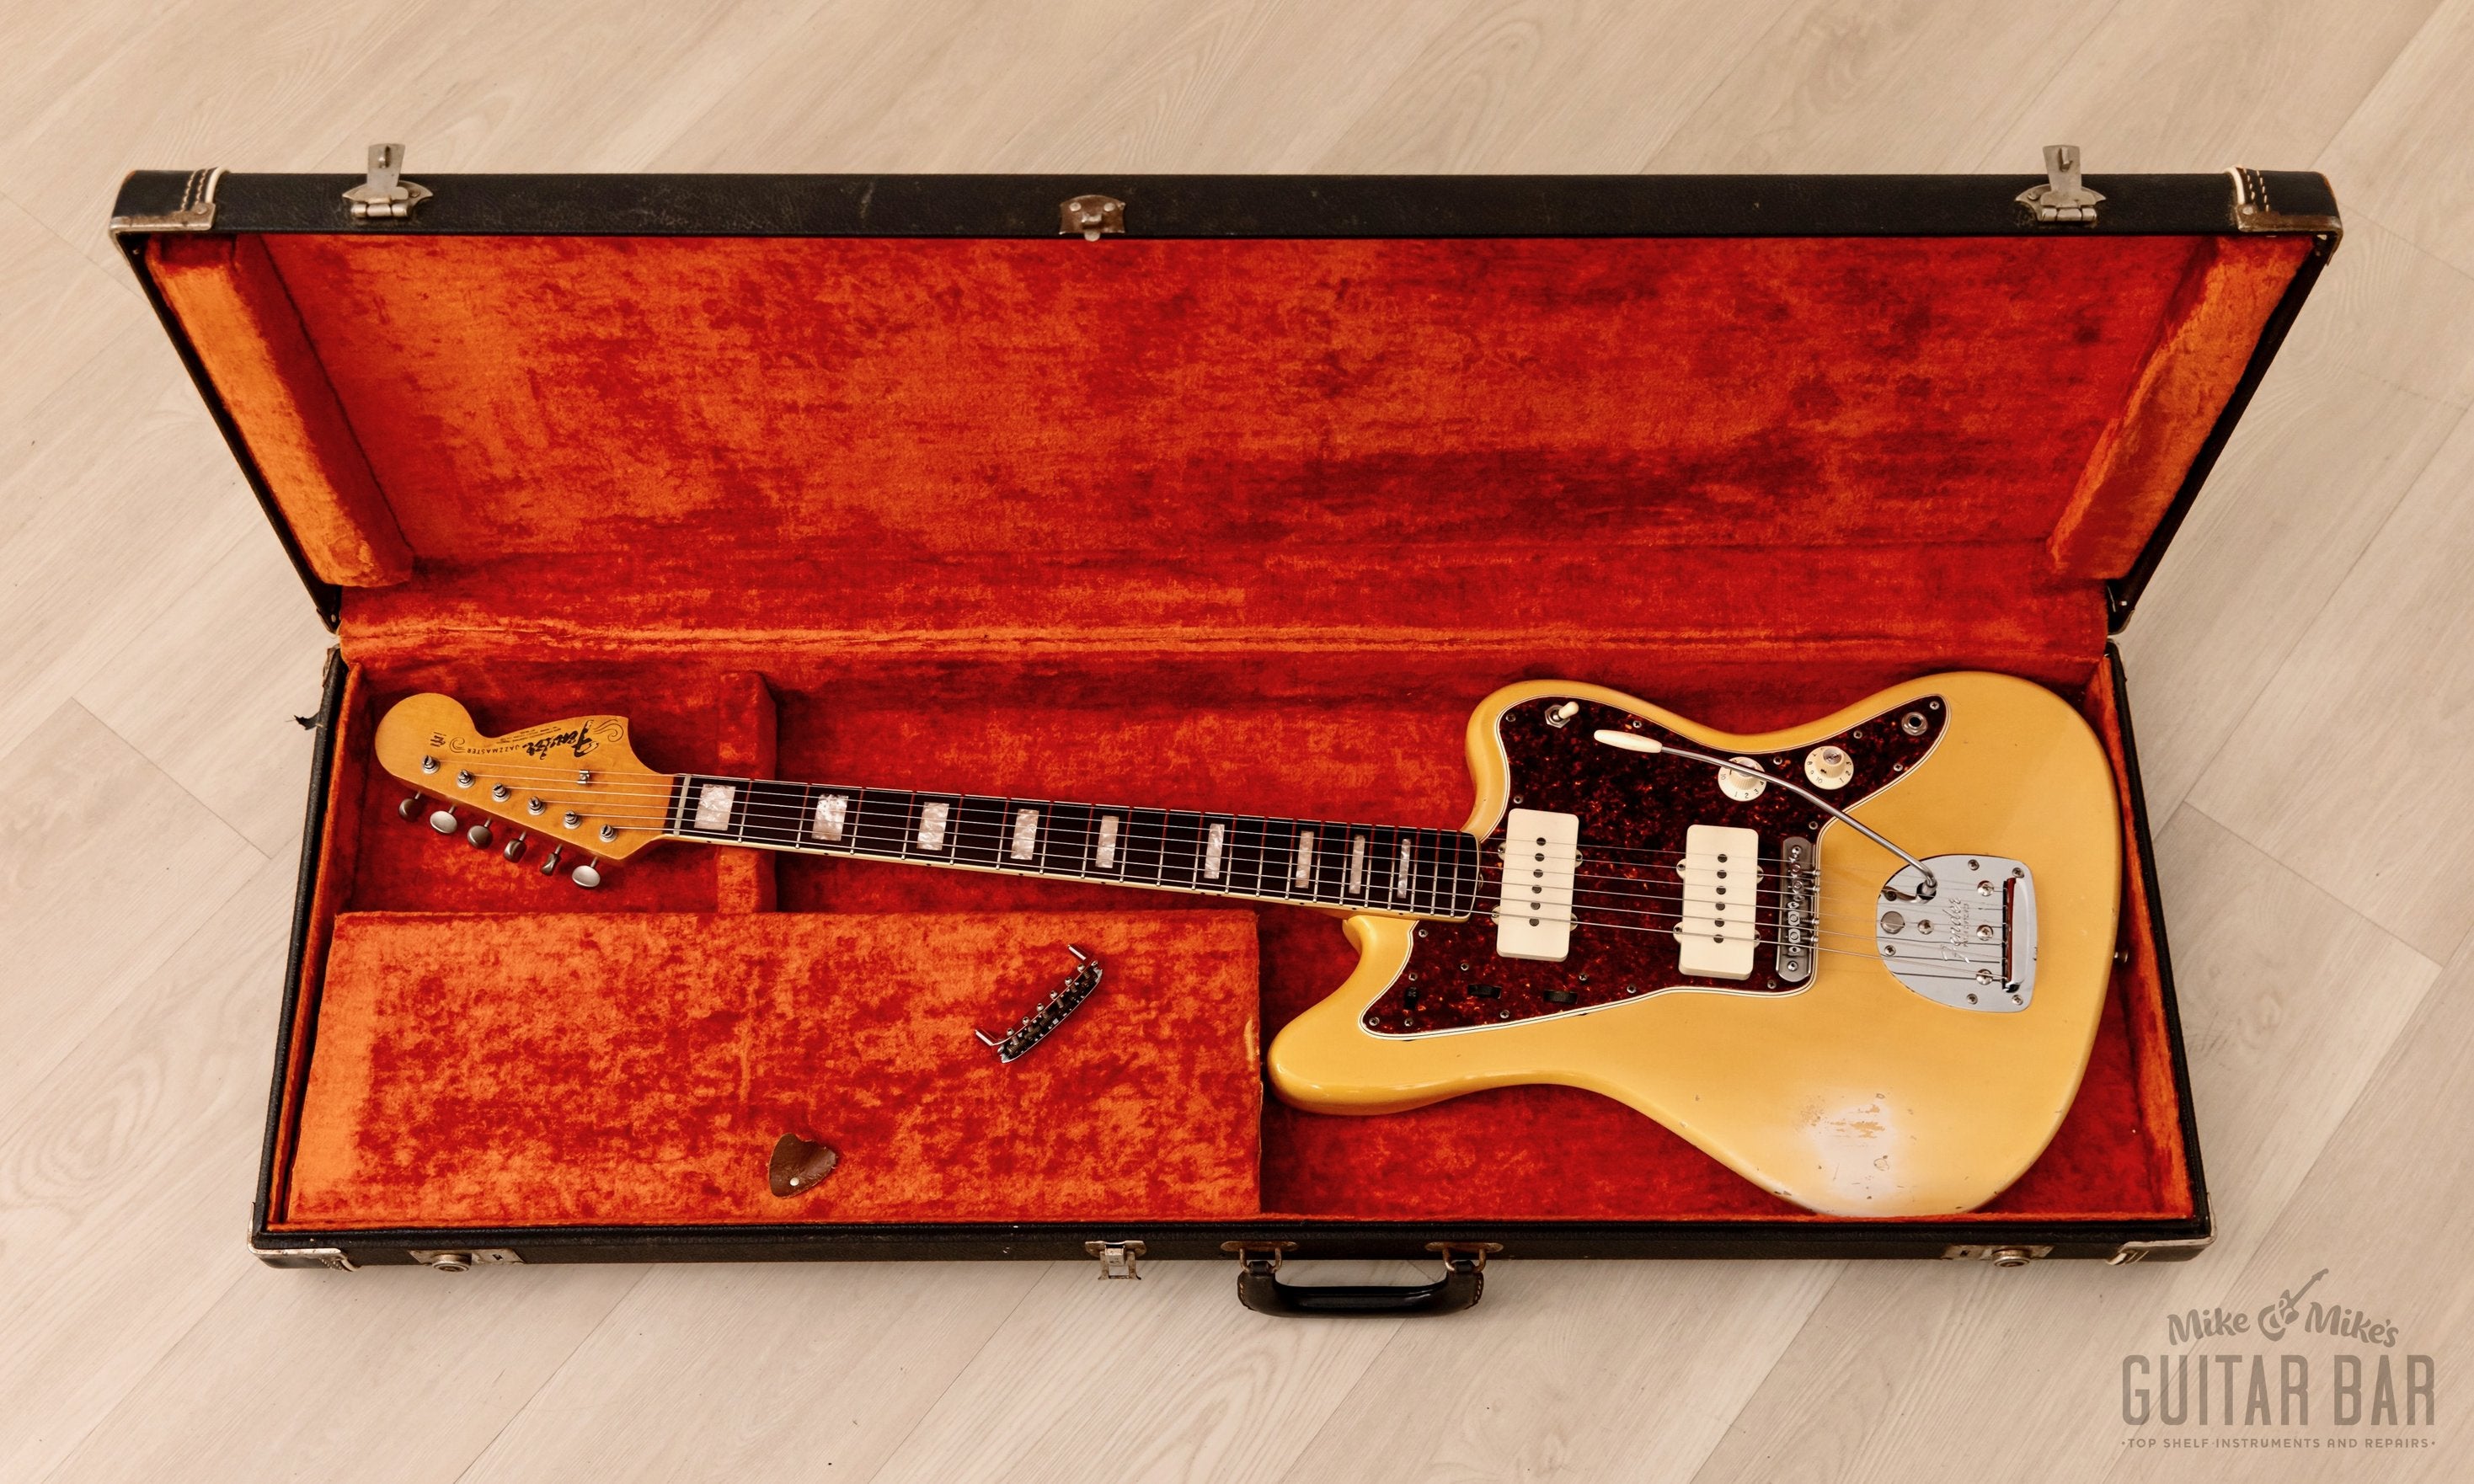 1967 Fender Jazzmaster Vintage Offset Guitar Blonde Ash Body w/ Case